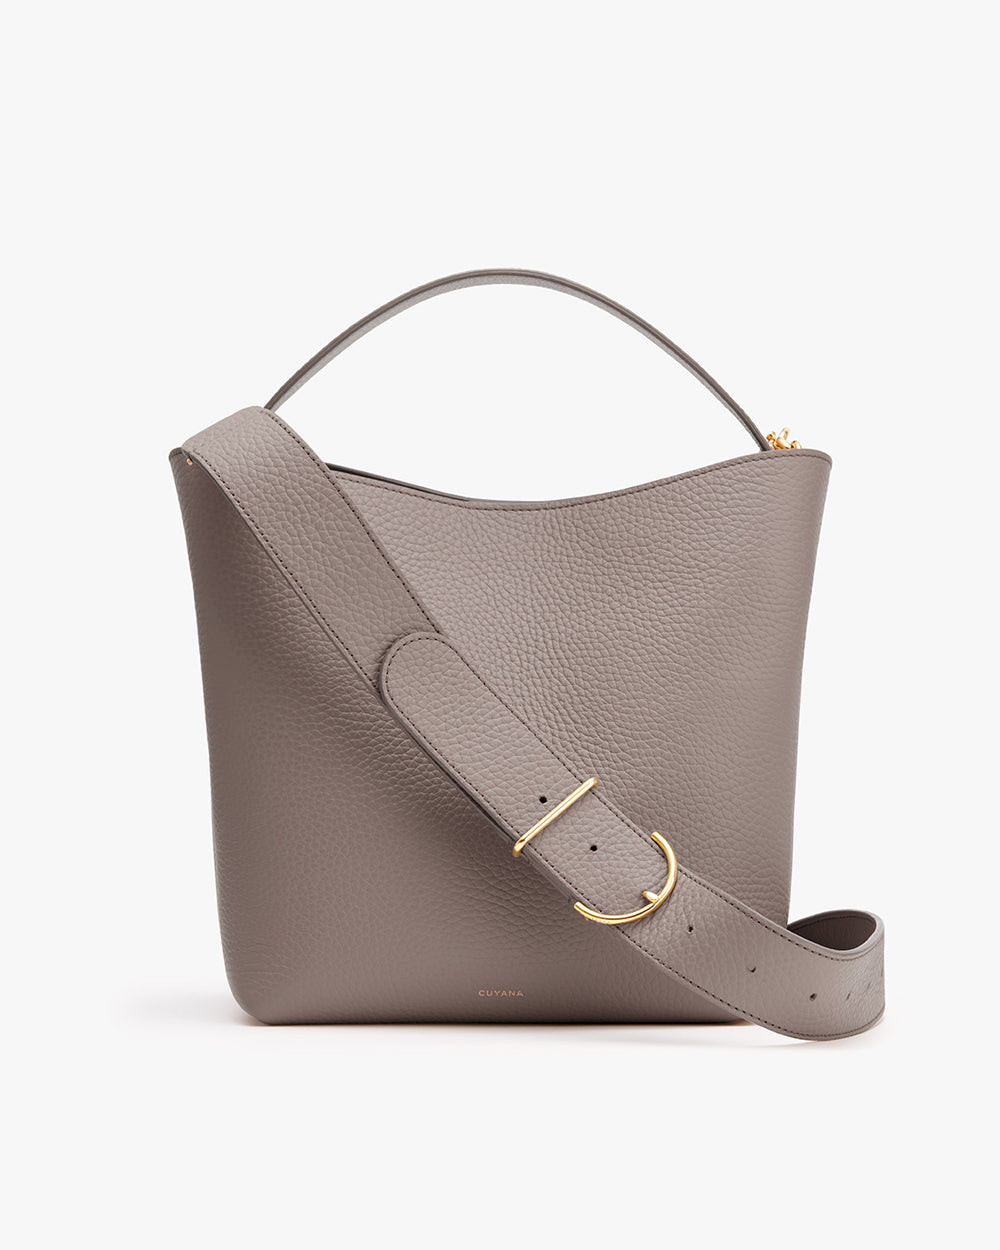 Handbag with a shoulder strap and a metallic buckle